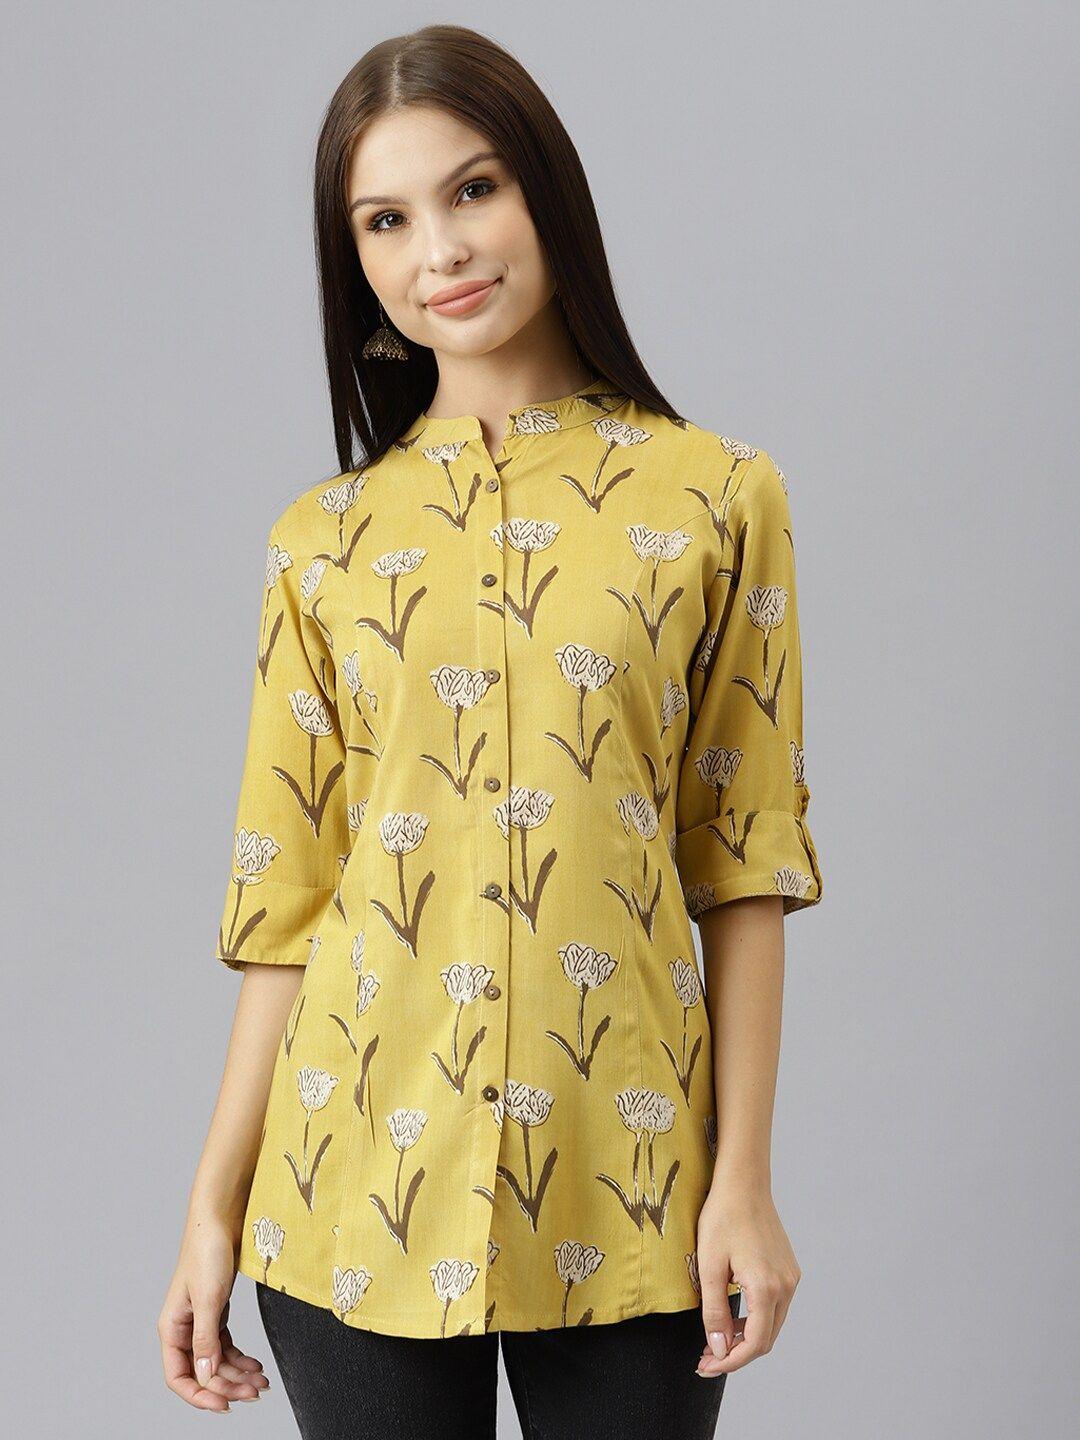 kalini floral printed mandarin collar roll-up sleeves longline shirt style top